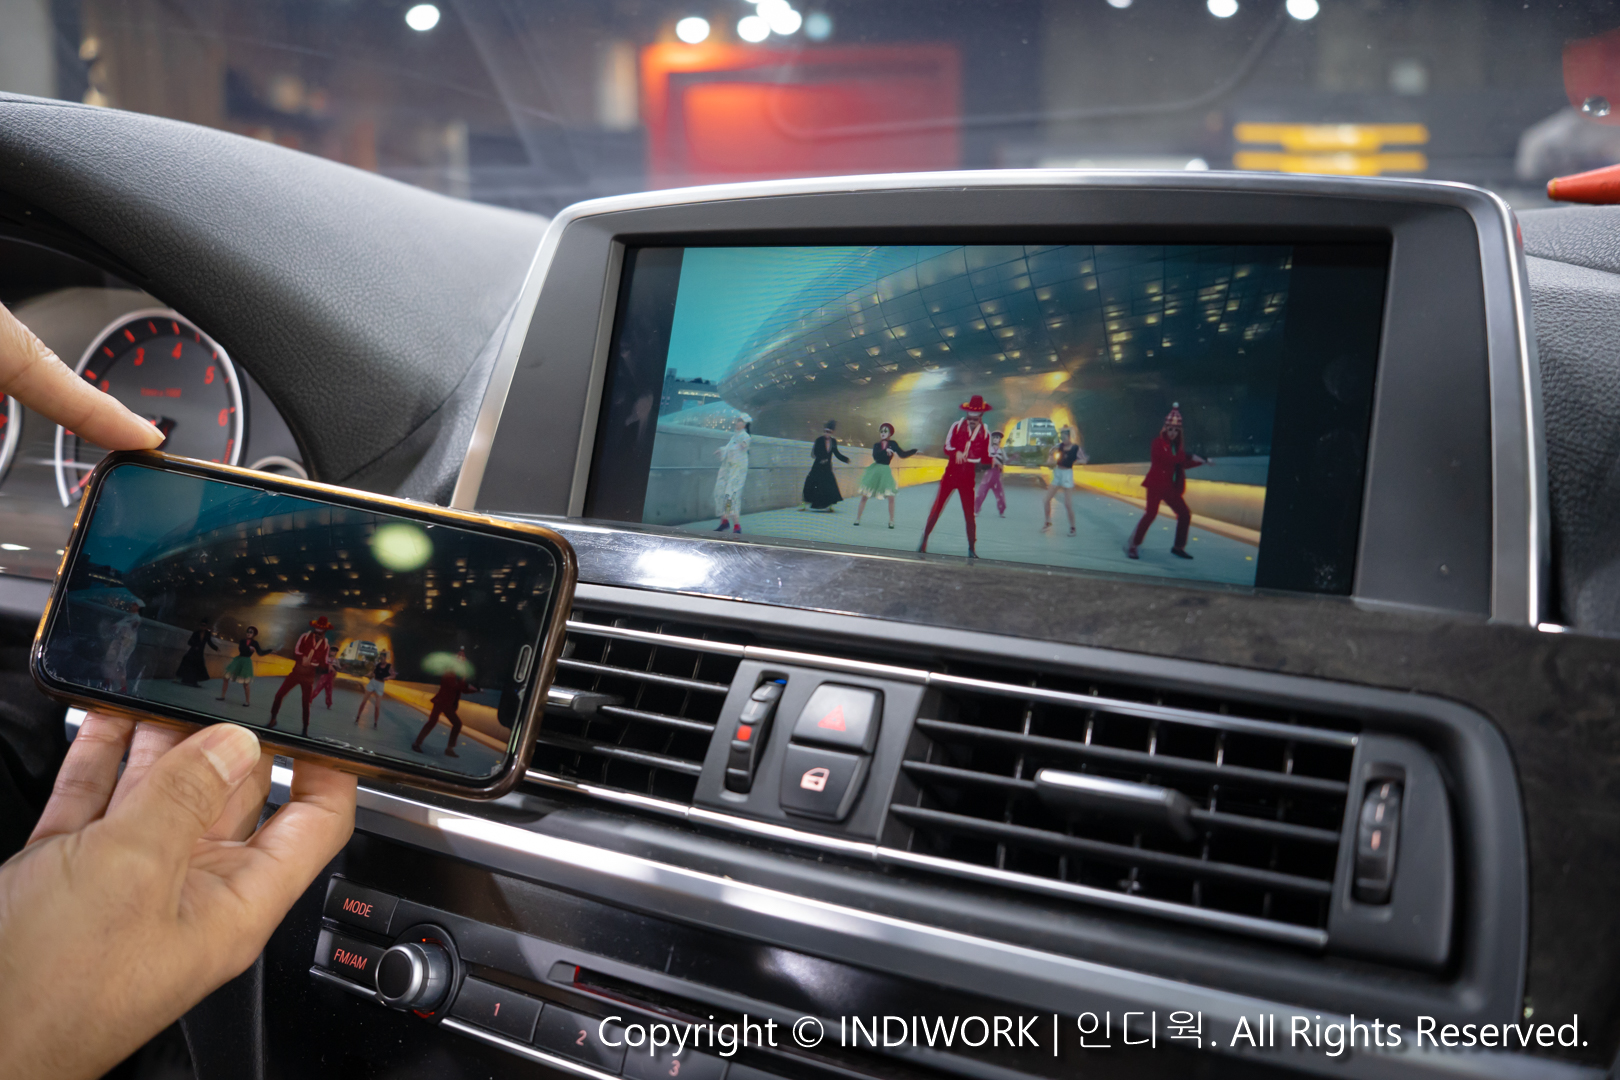 Apple Carplay smartphone mirroring for 2012 BMW 6series F13 "SCB-CIC"